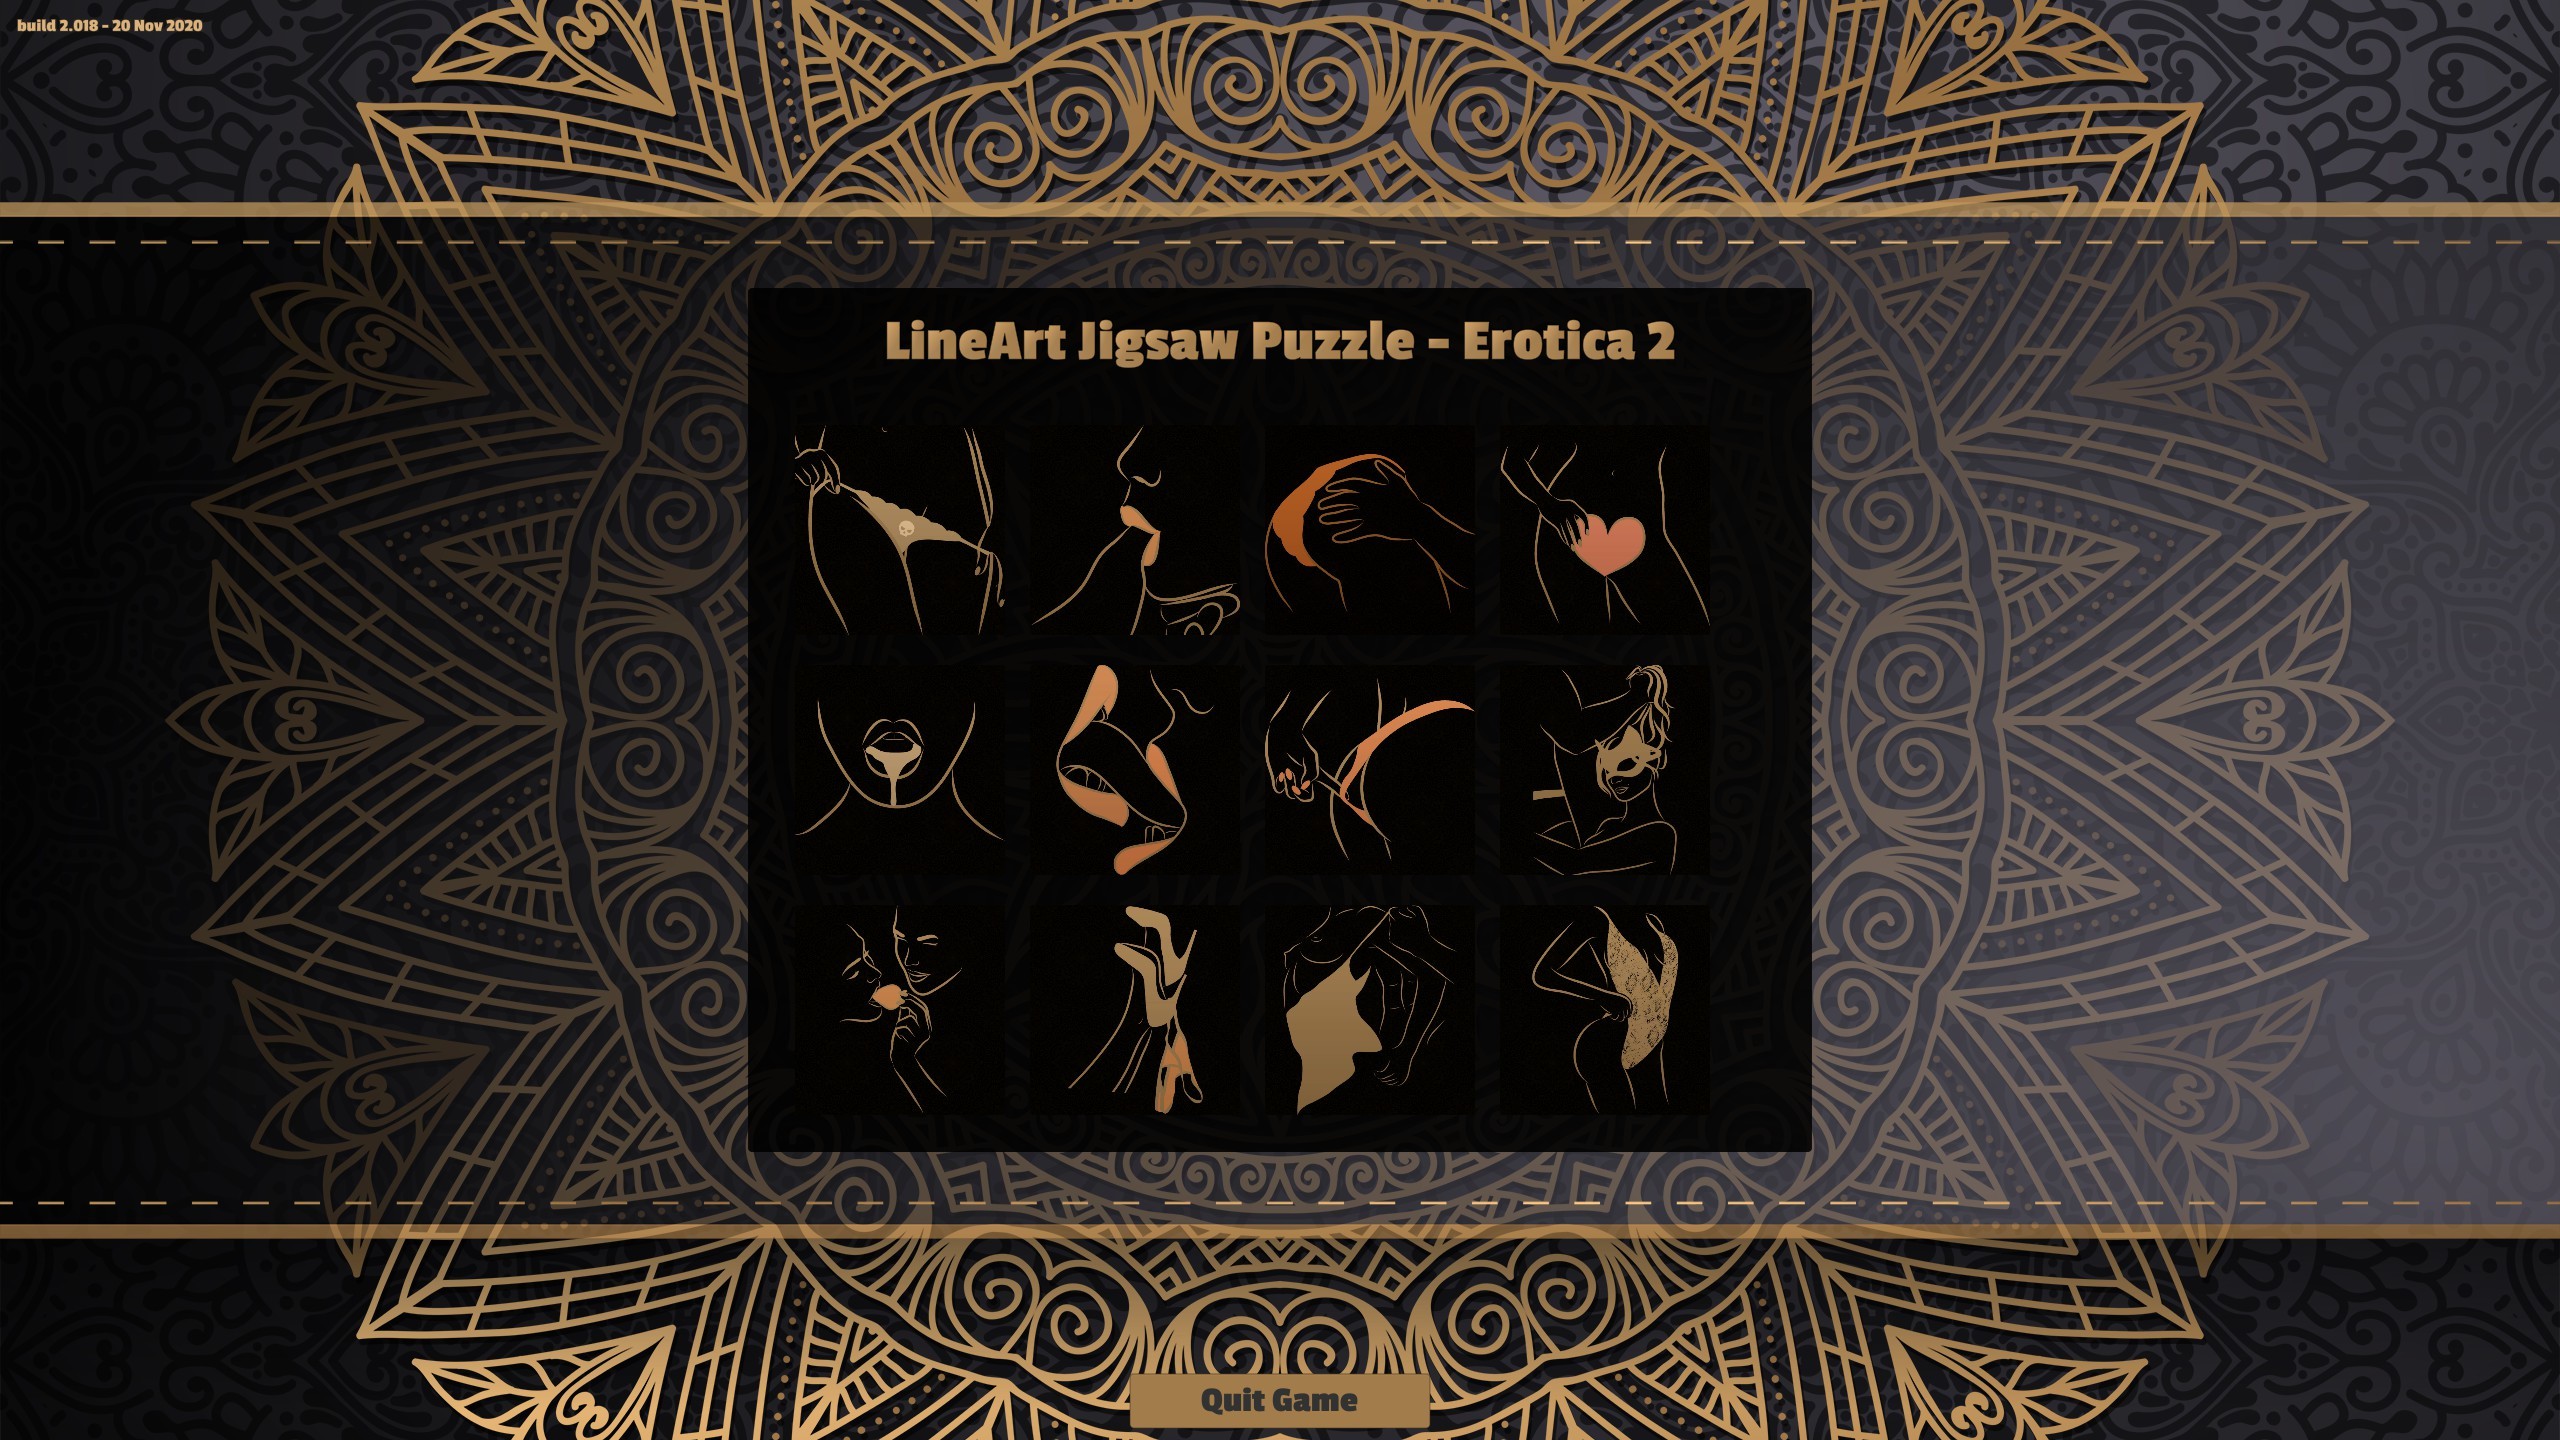 LineArt Jigsaw Puzzle - Erotica 2 Steam CD Key, 0.21 usd